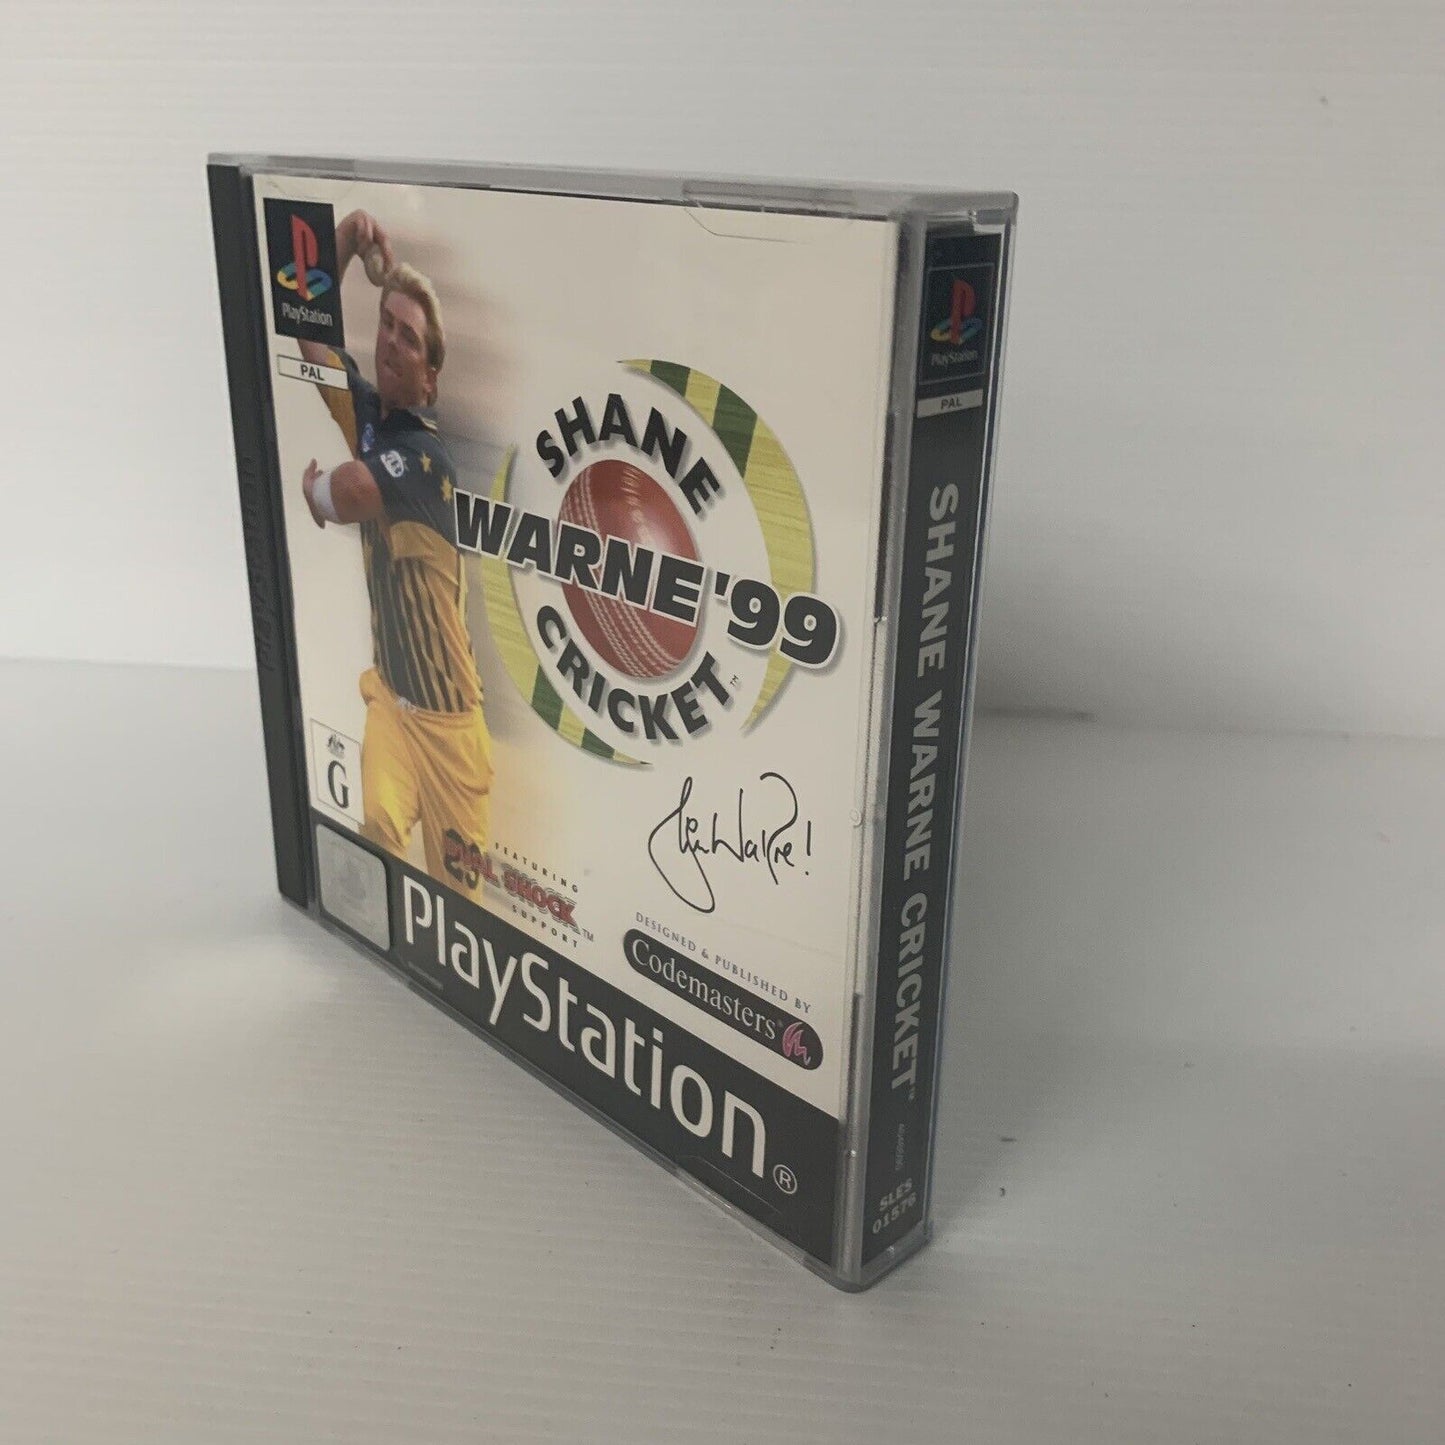 Shane Warne Cricket 99 Game PlayStation 1 PS1